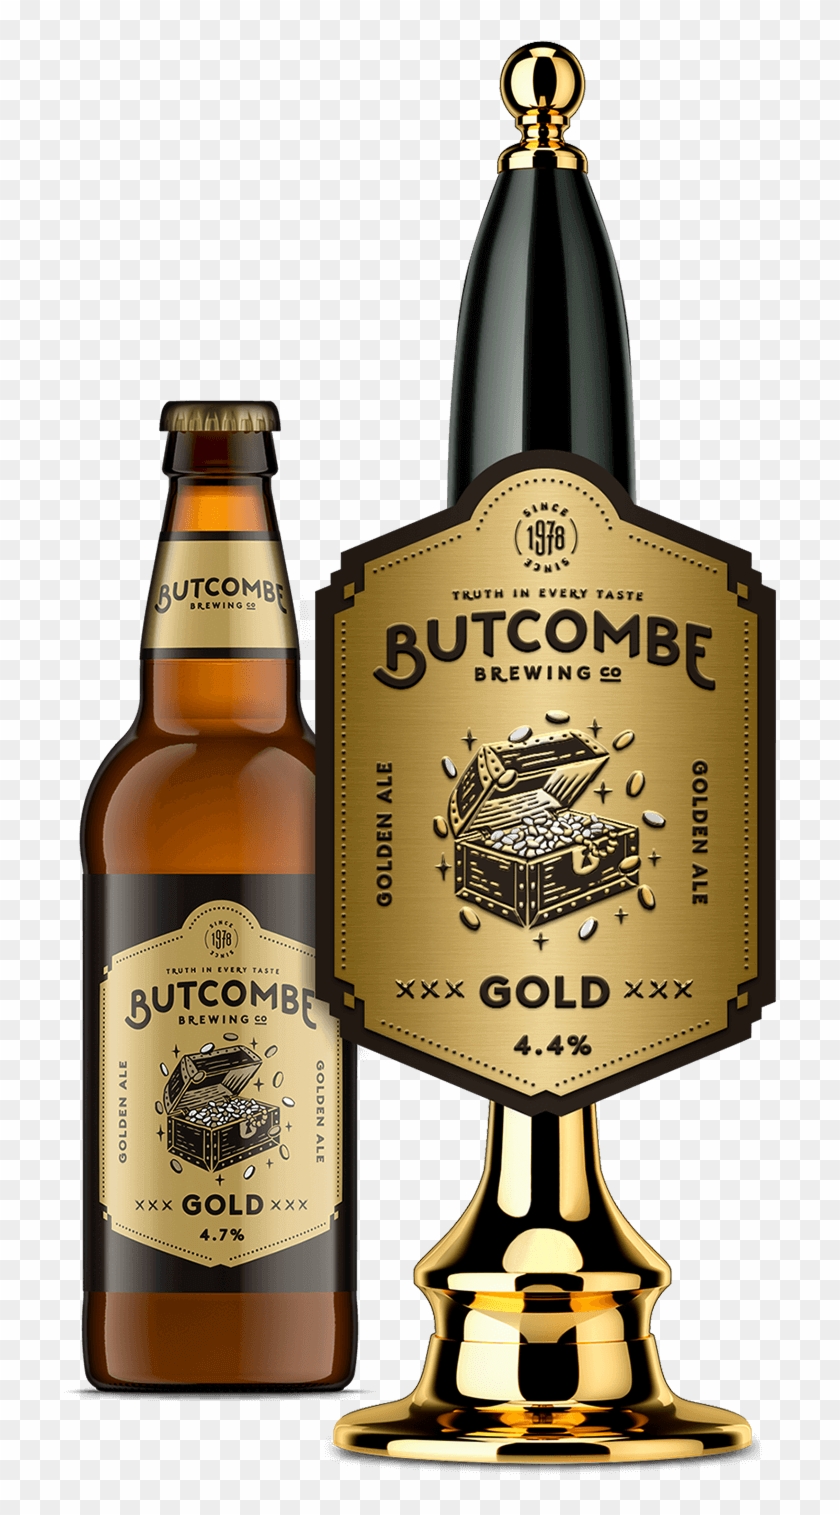 Butcombe Gold Pump And Bottle - Adam Henson Rare Breeds Clipart #5834308